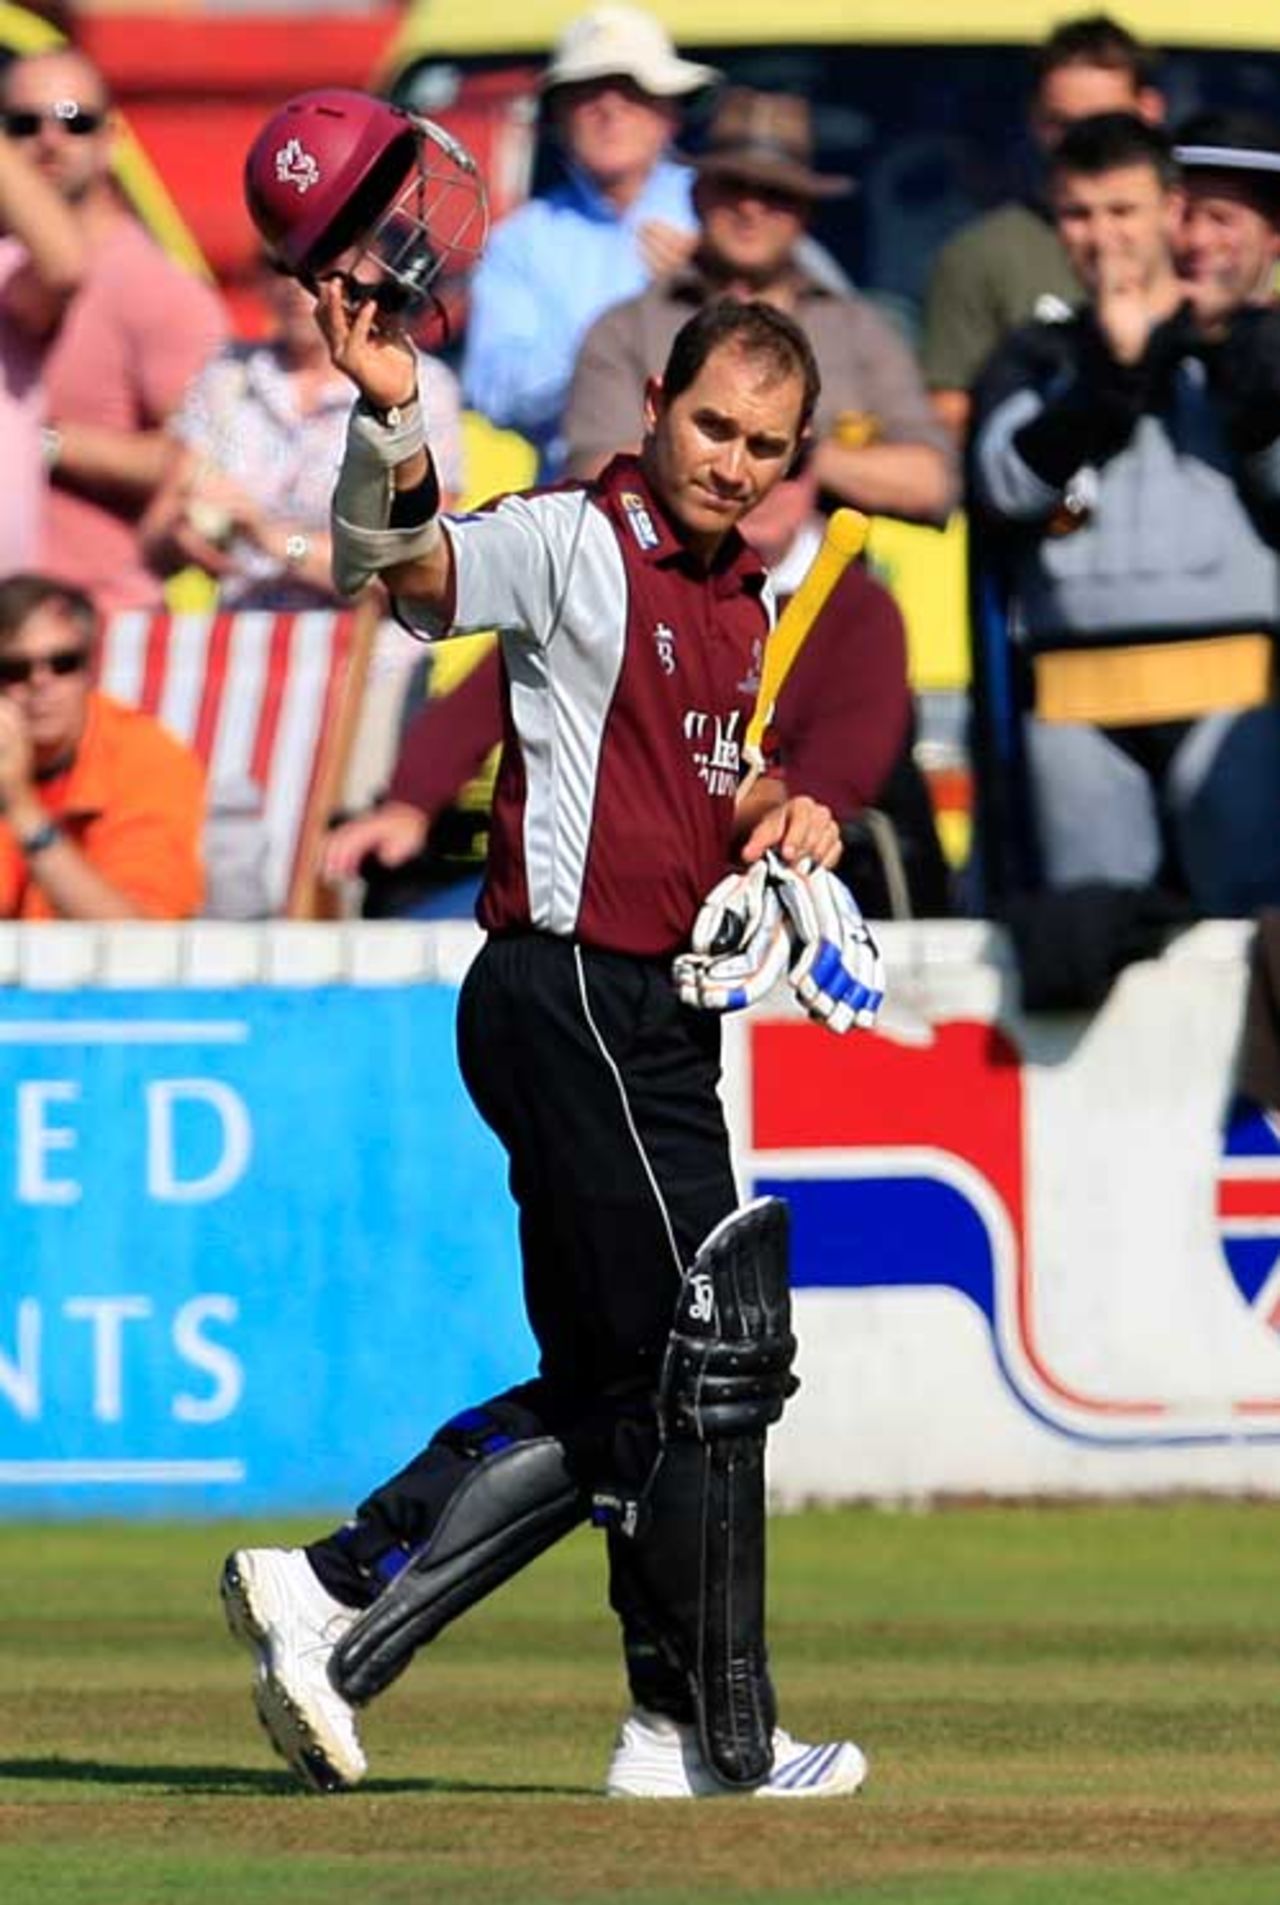 Justin Langer salutes the crowd after his final innings for Somerset, Somerset v Durham, Pro40, Taunton, September 27, 2009